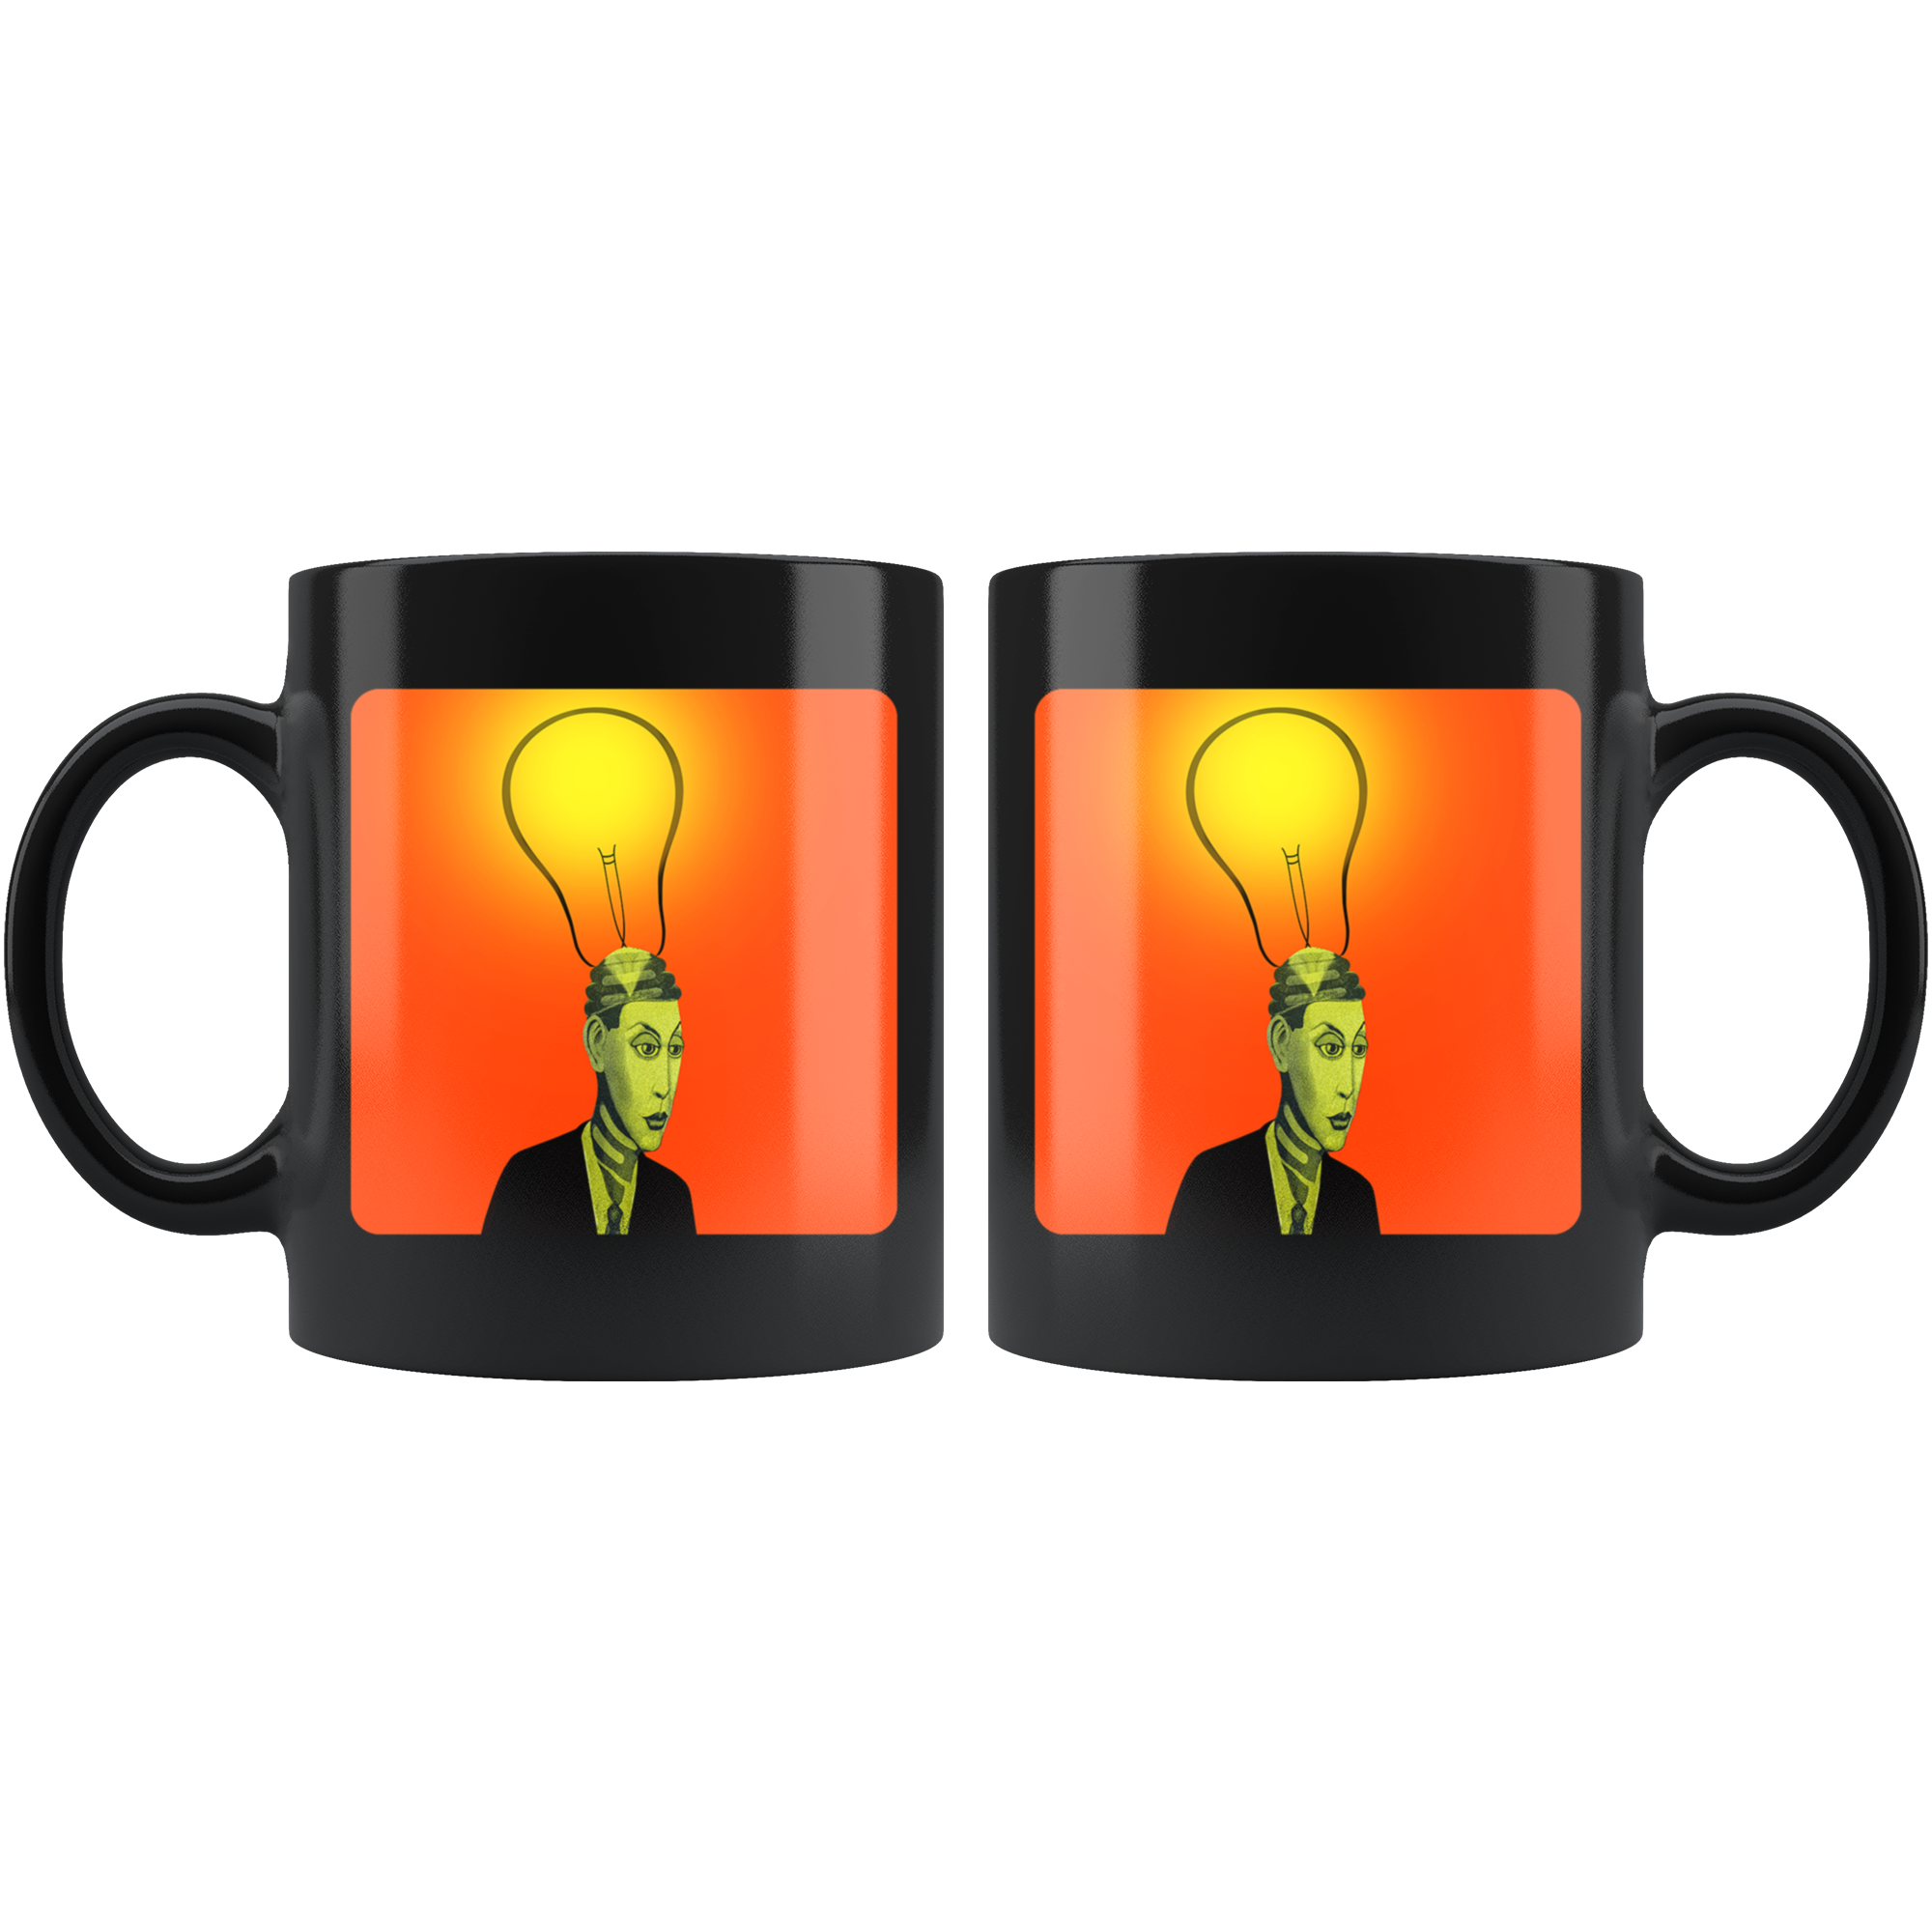 Bright Idea - 11 oz black mug